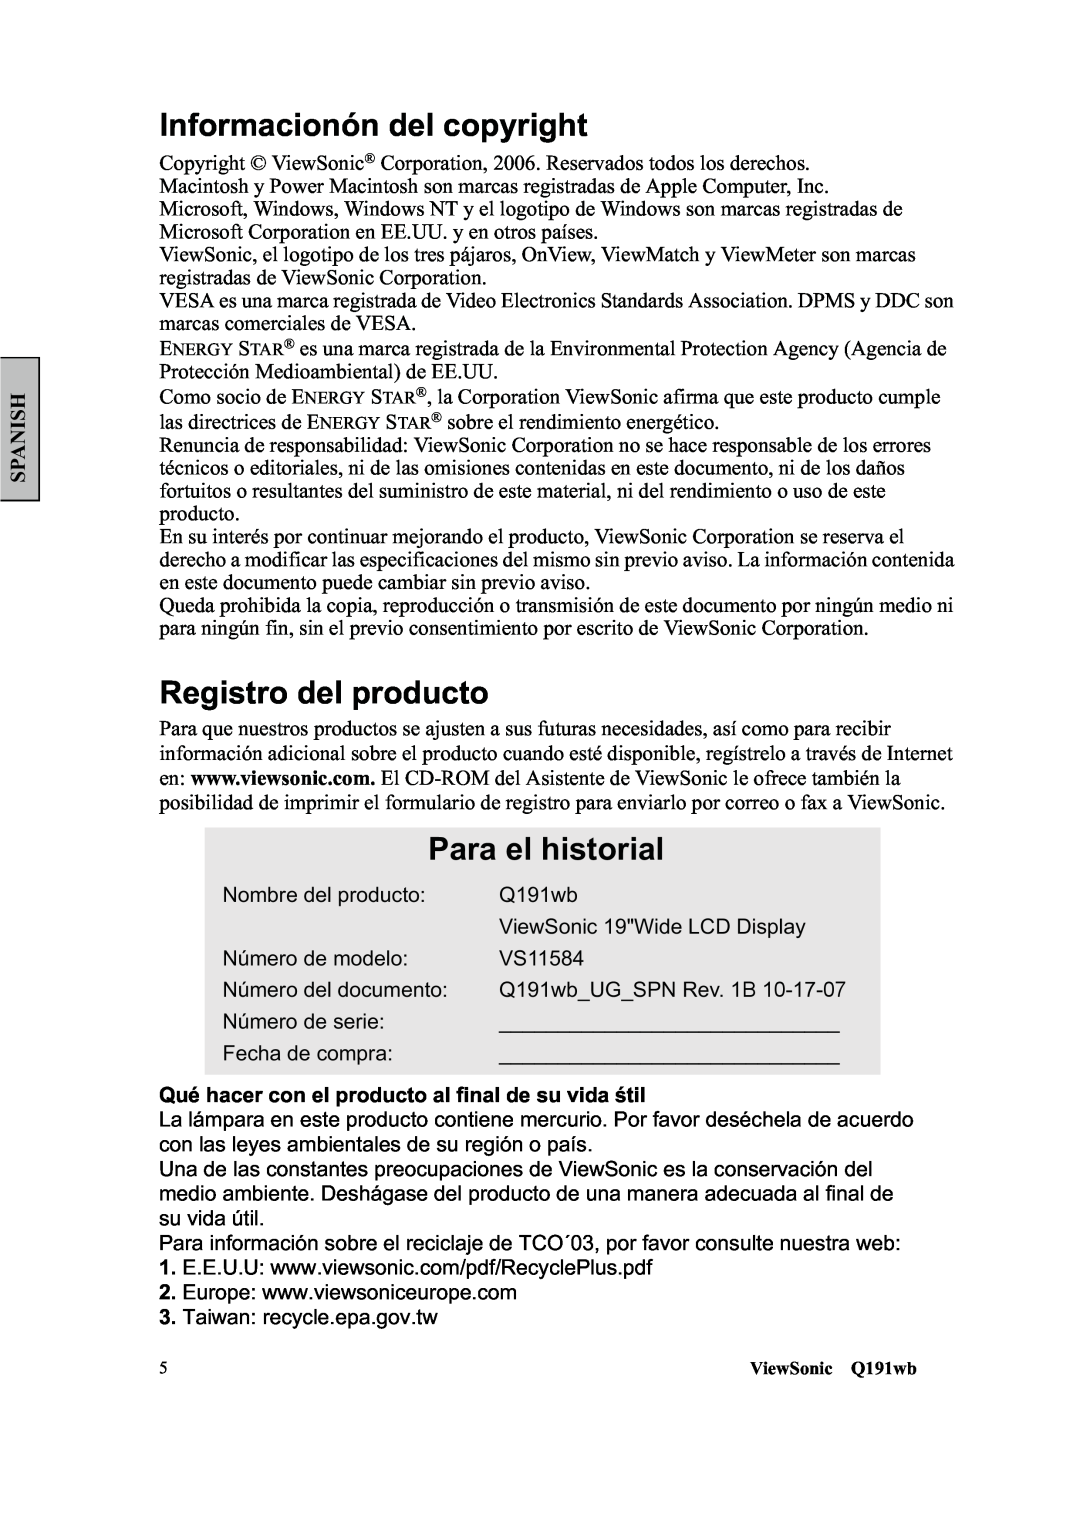 ViewSonic Q191WB manual Informacionón del copyright, Registro del producto, Para el historial, Spanish 